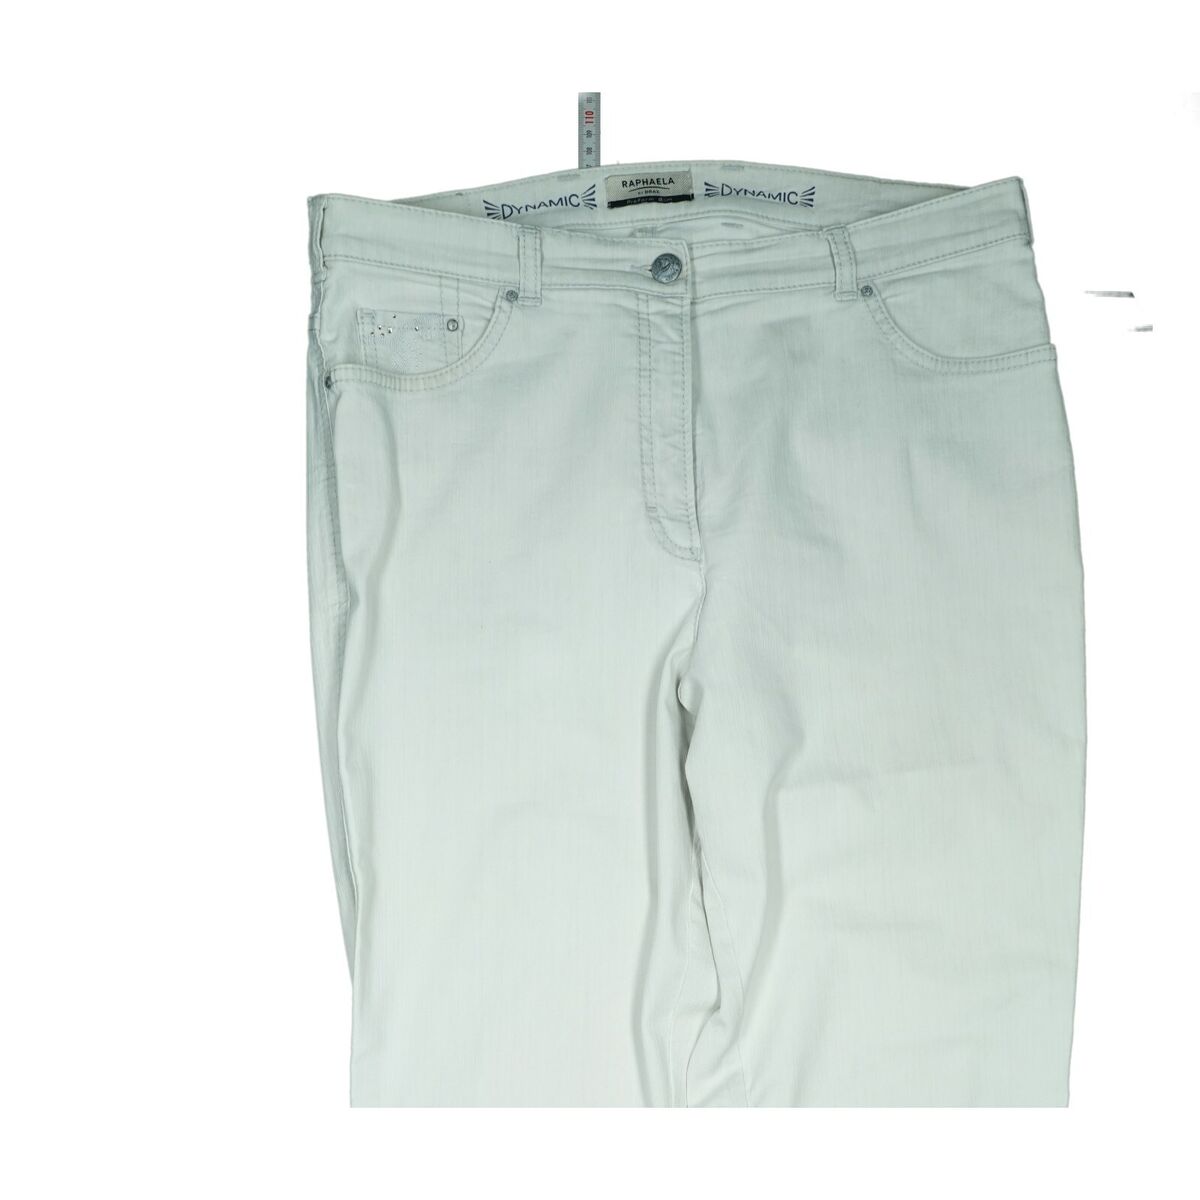 Raphaela by BRAX Damen Jeans Hose stretch straight high 42 XL W32 L32 Creme  TOP | eBay